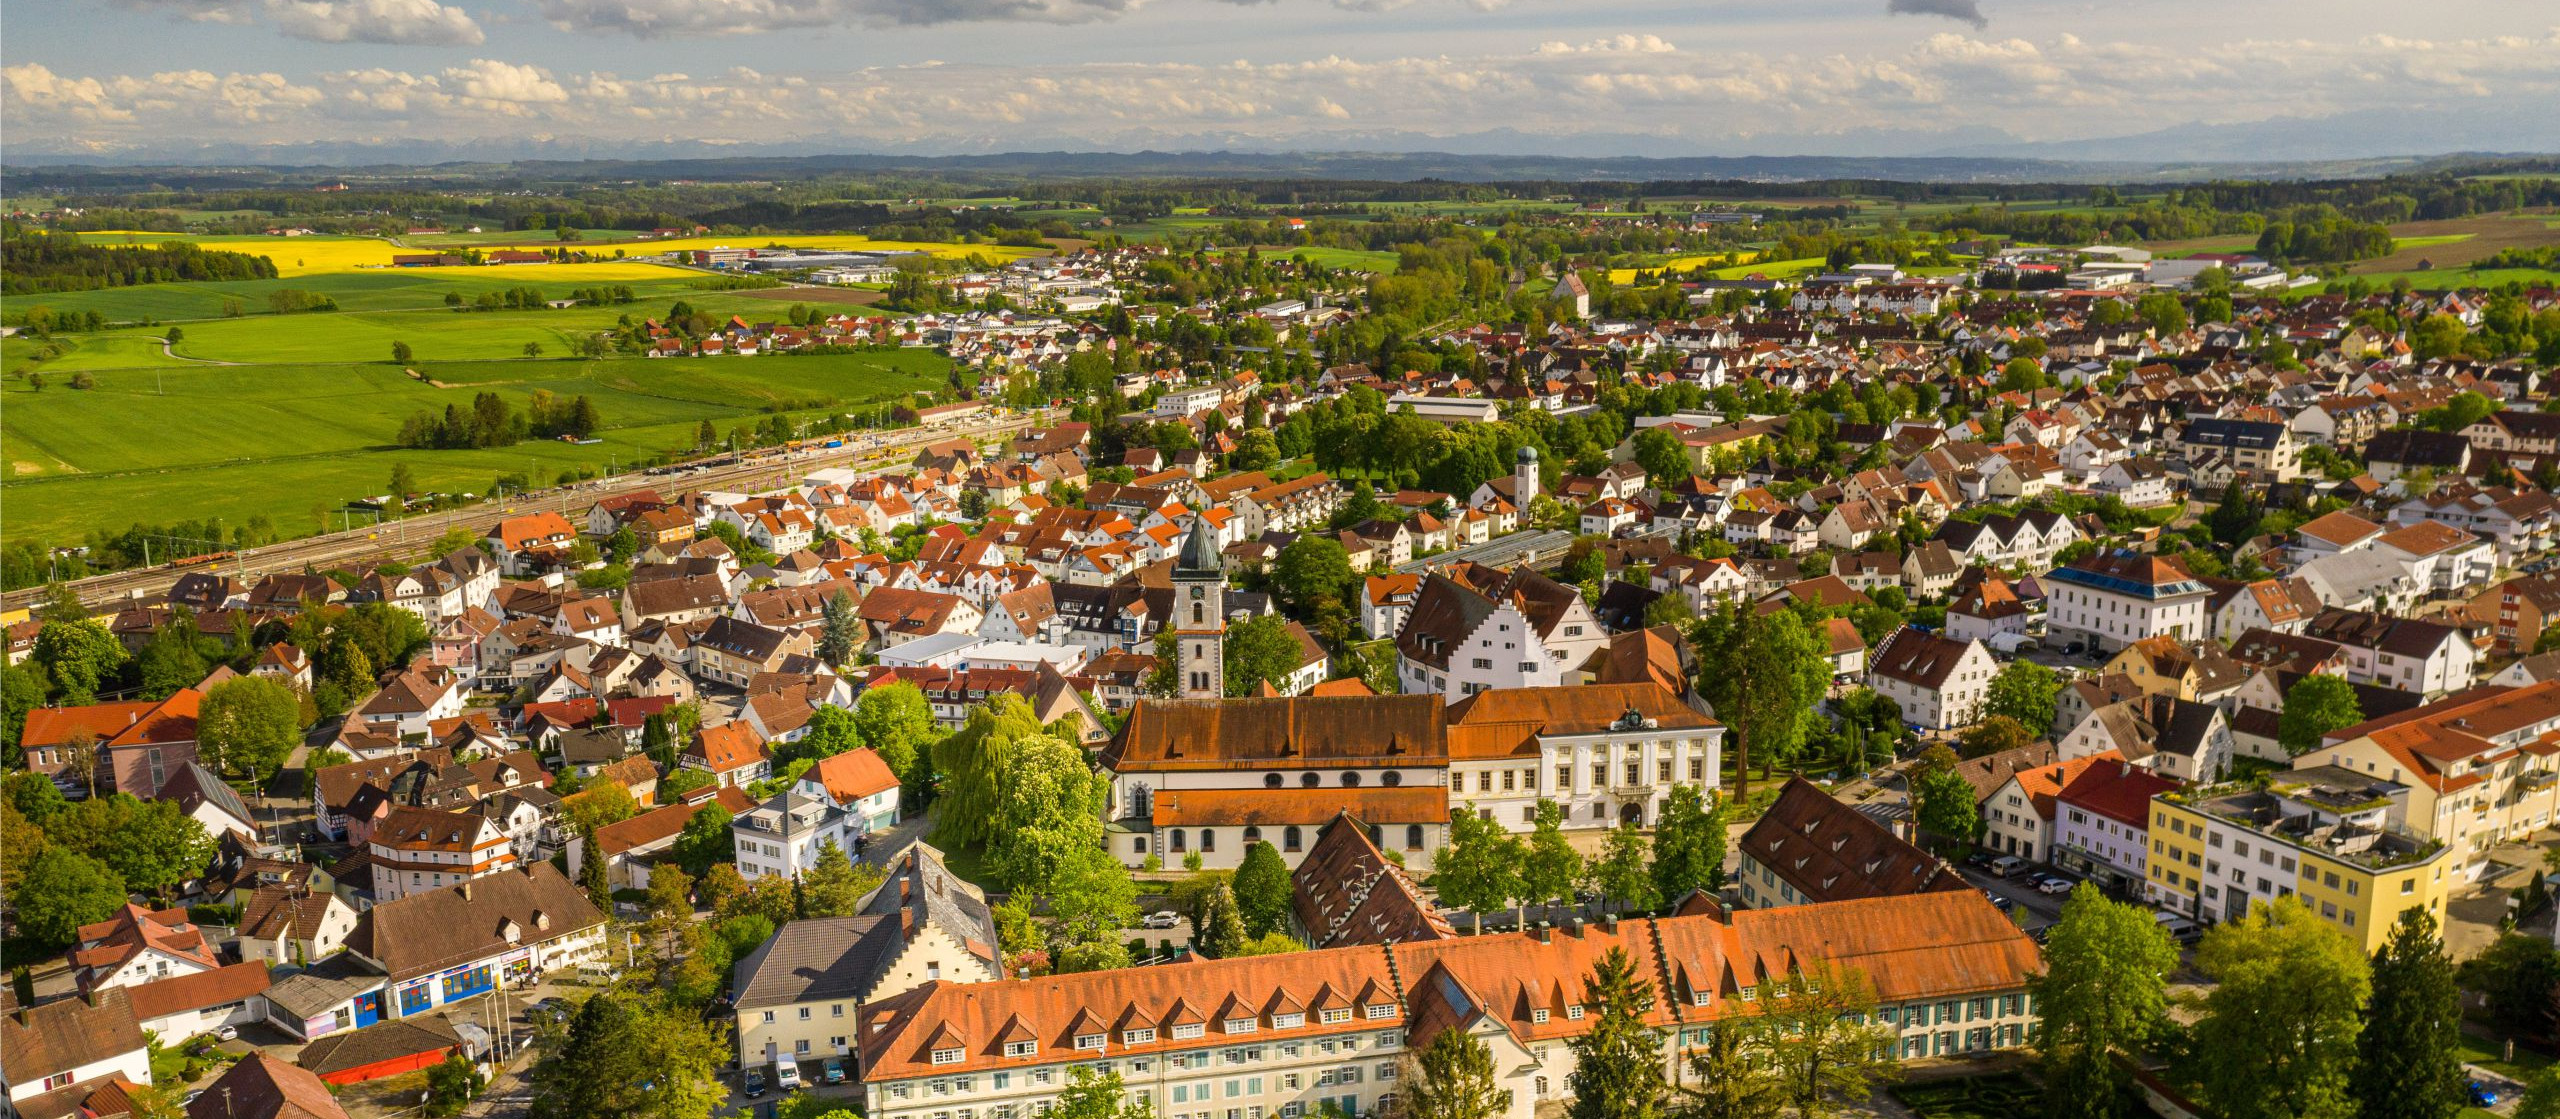 Luftaufnahme Stadtkern Aulendorf